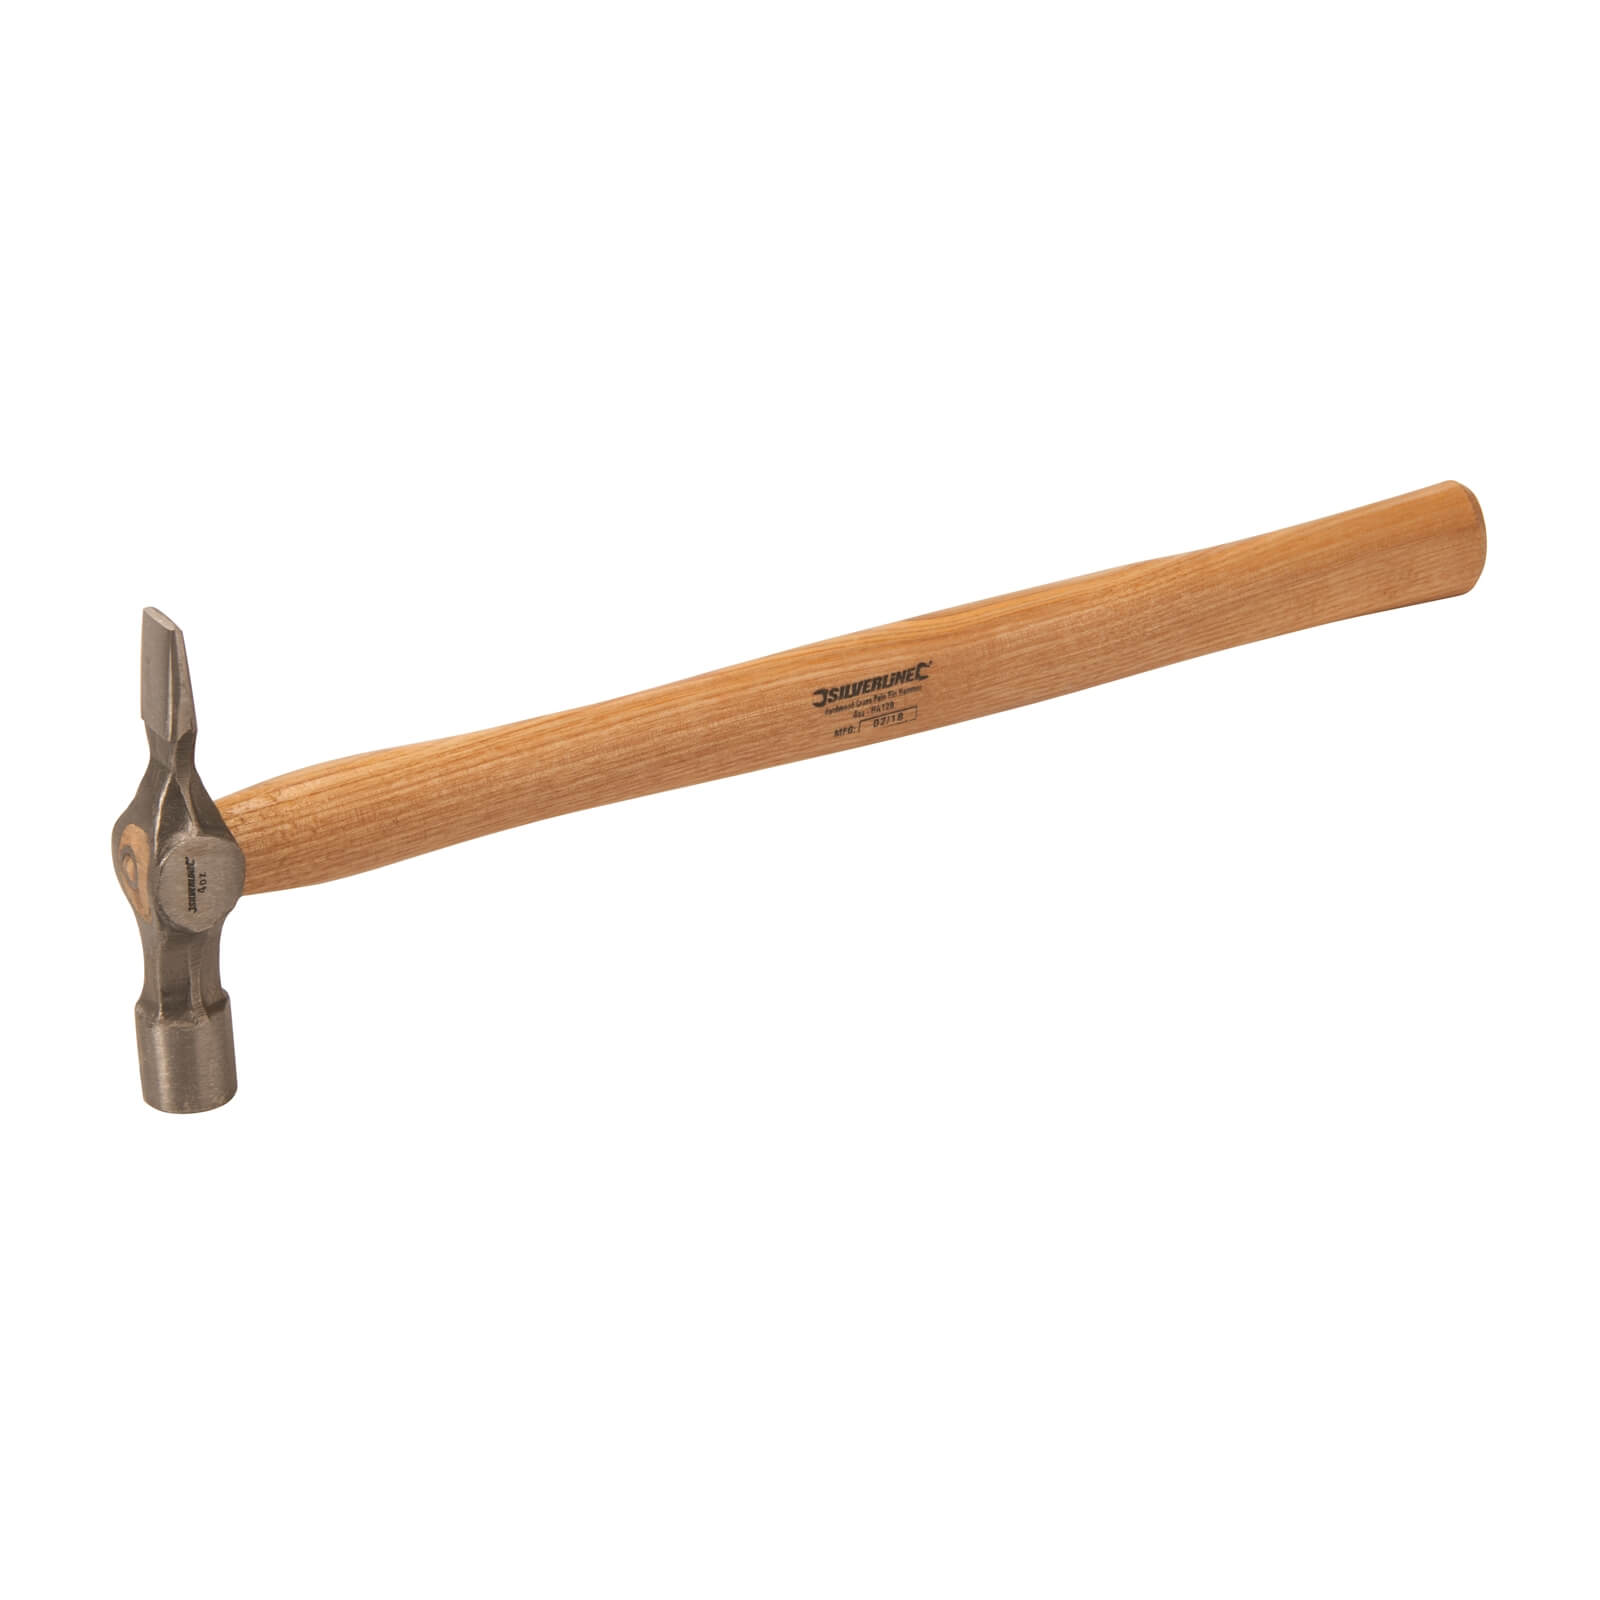 Silverline Hardwood Cross Pein Pin Hammer - 4oz (113g)